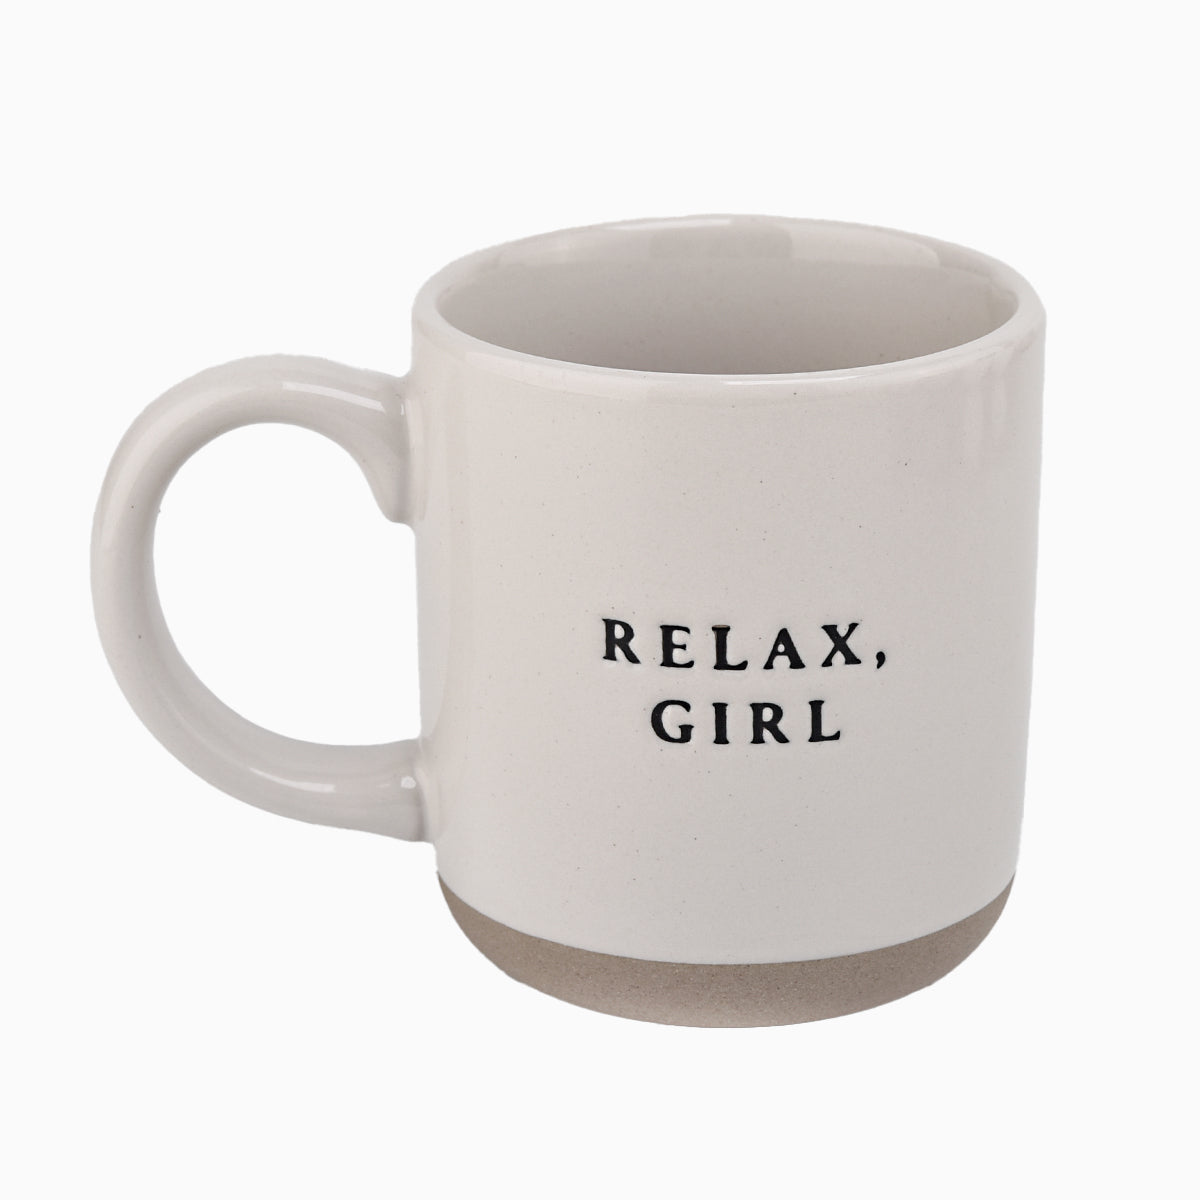 Relax Girl - Cream Stoneware Coffee Mug - 14 oz